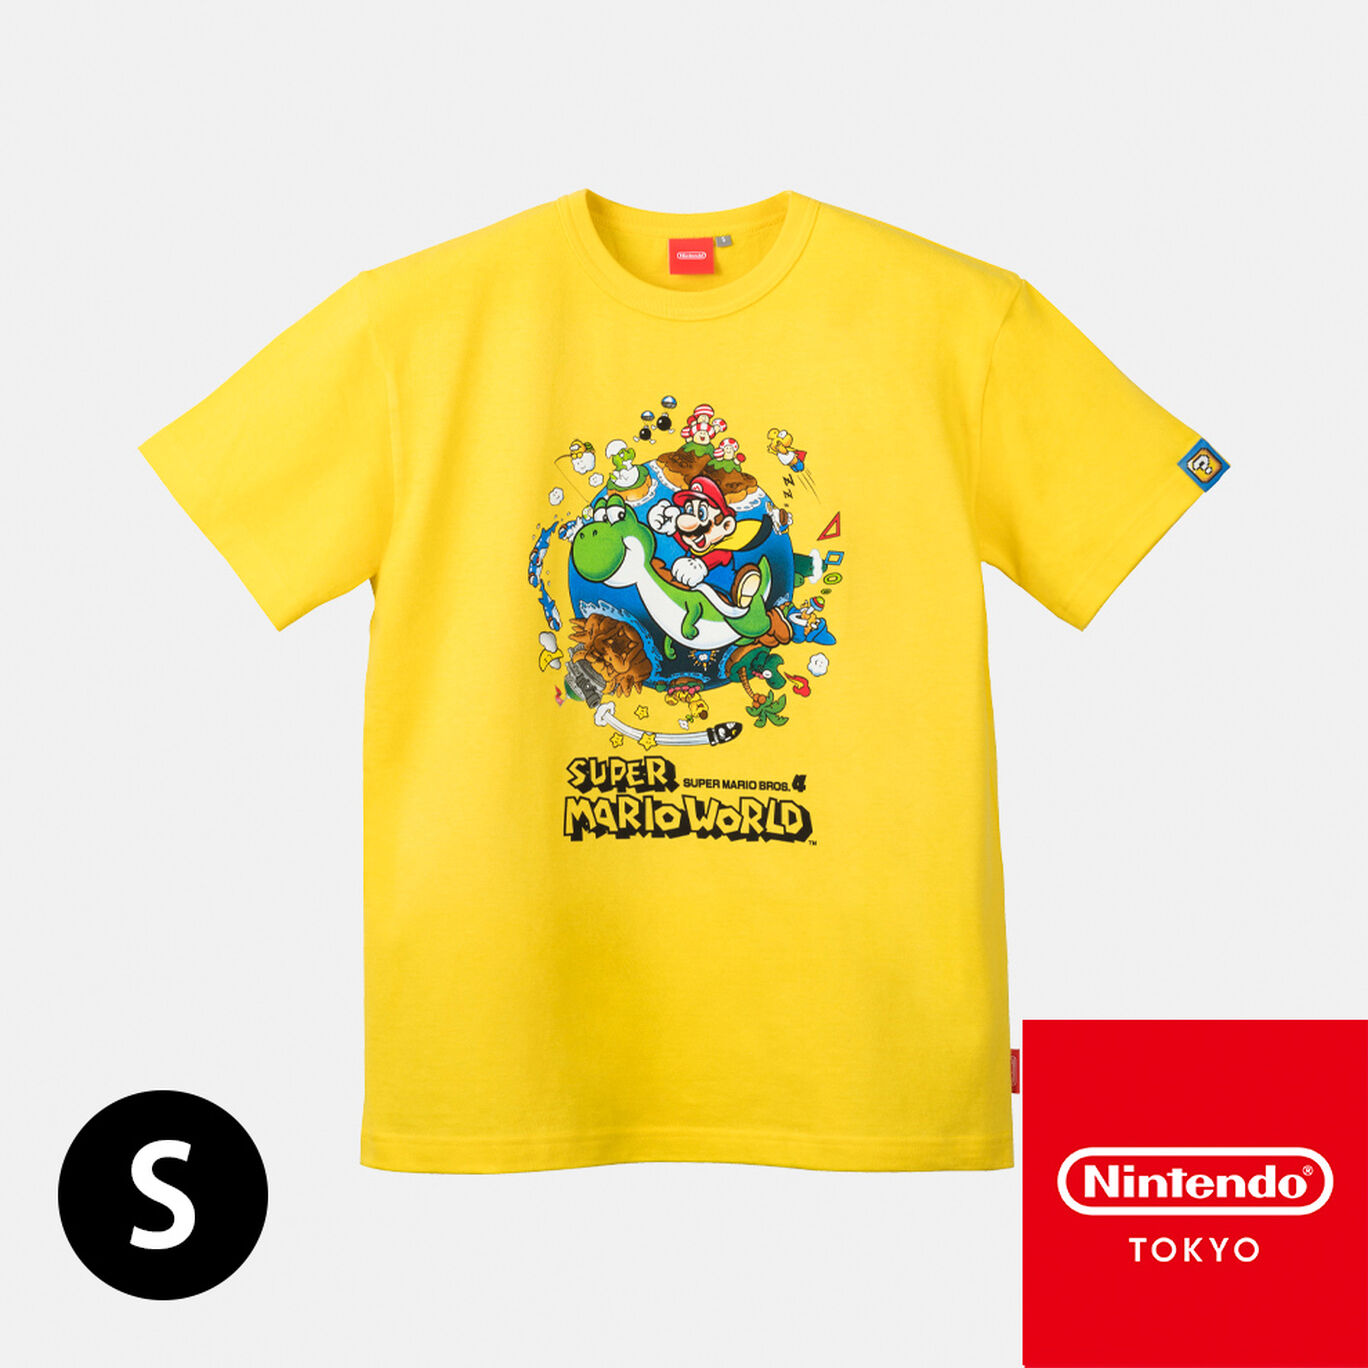 Tシャツ スーパーマリオワールド S【Nintendo TOKYO/OSAKA取り扱い商品】